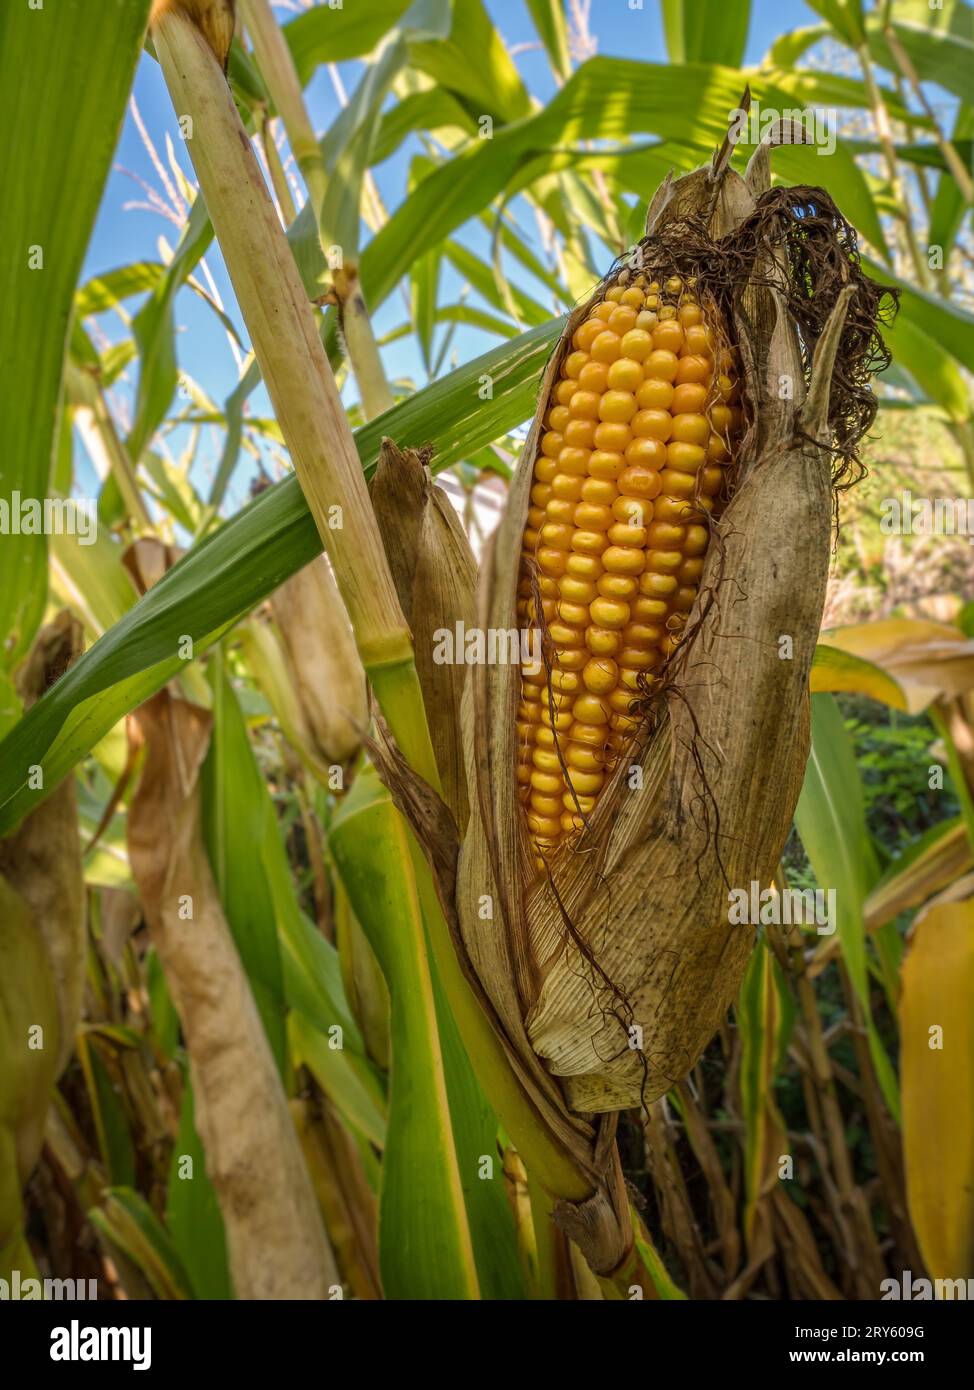 Closeup shot of sweet corn cob ripening on a plant stem Stock Photo